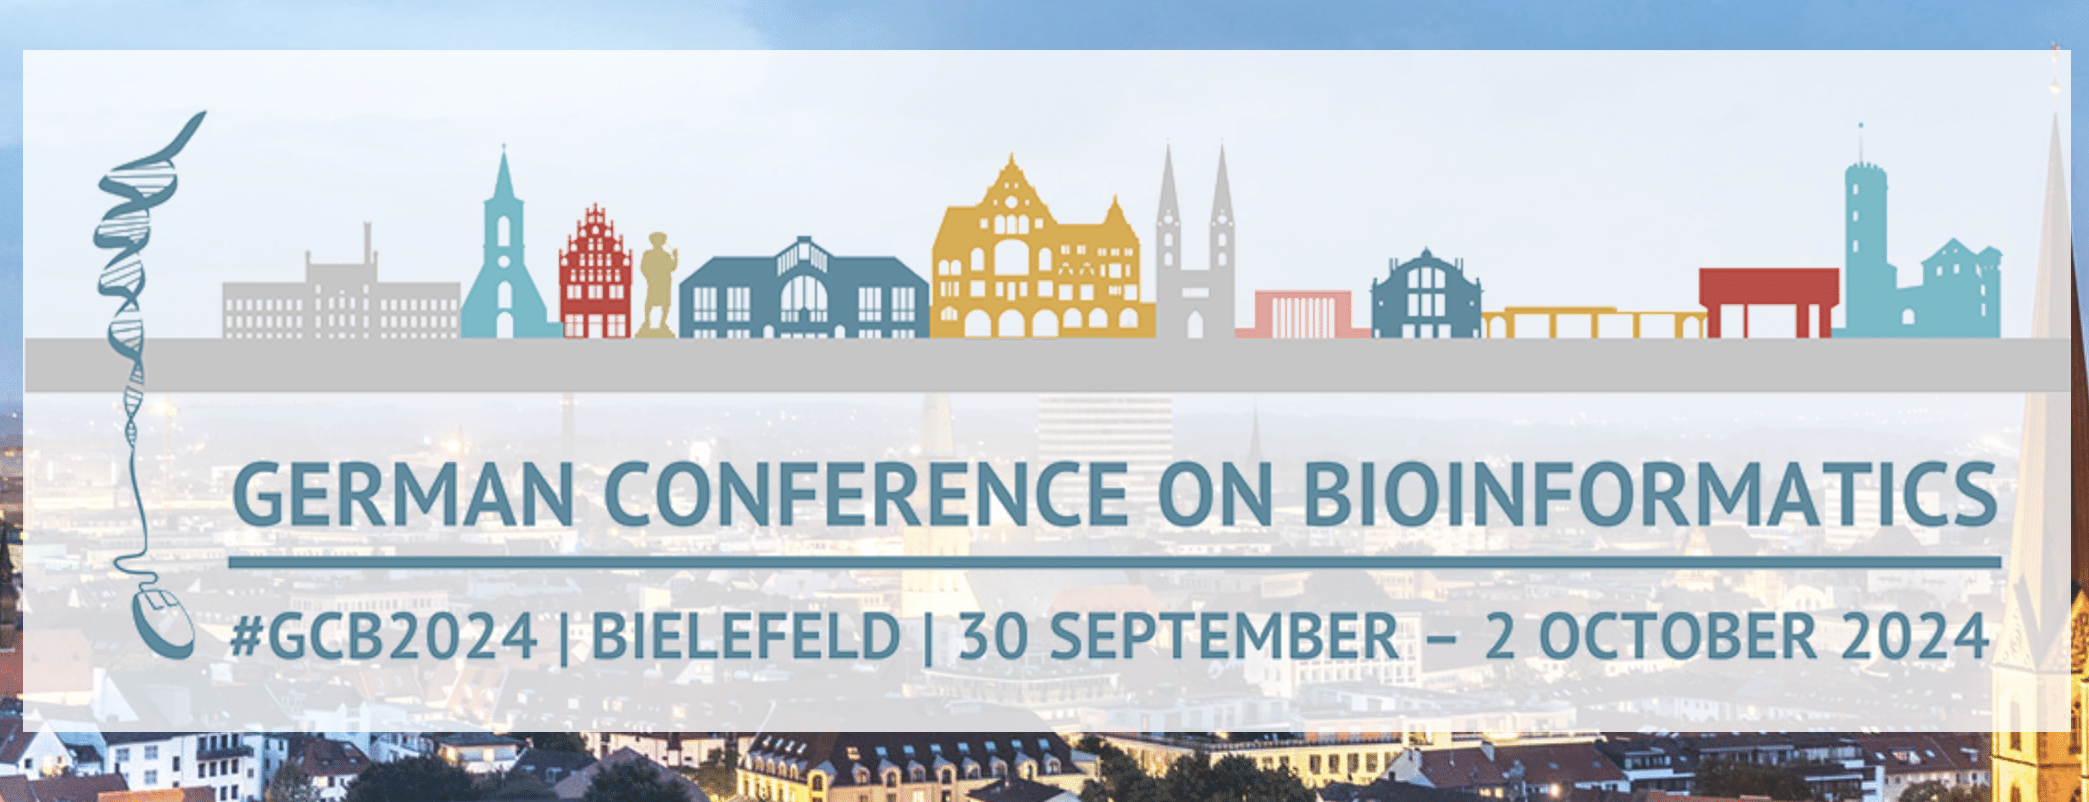 German Conference on Bioinformatics (GCB)